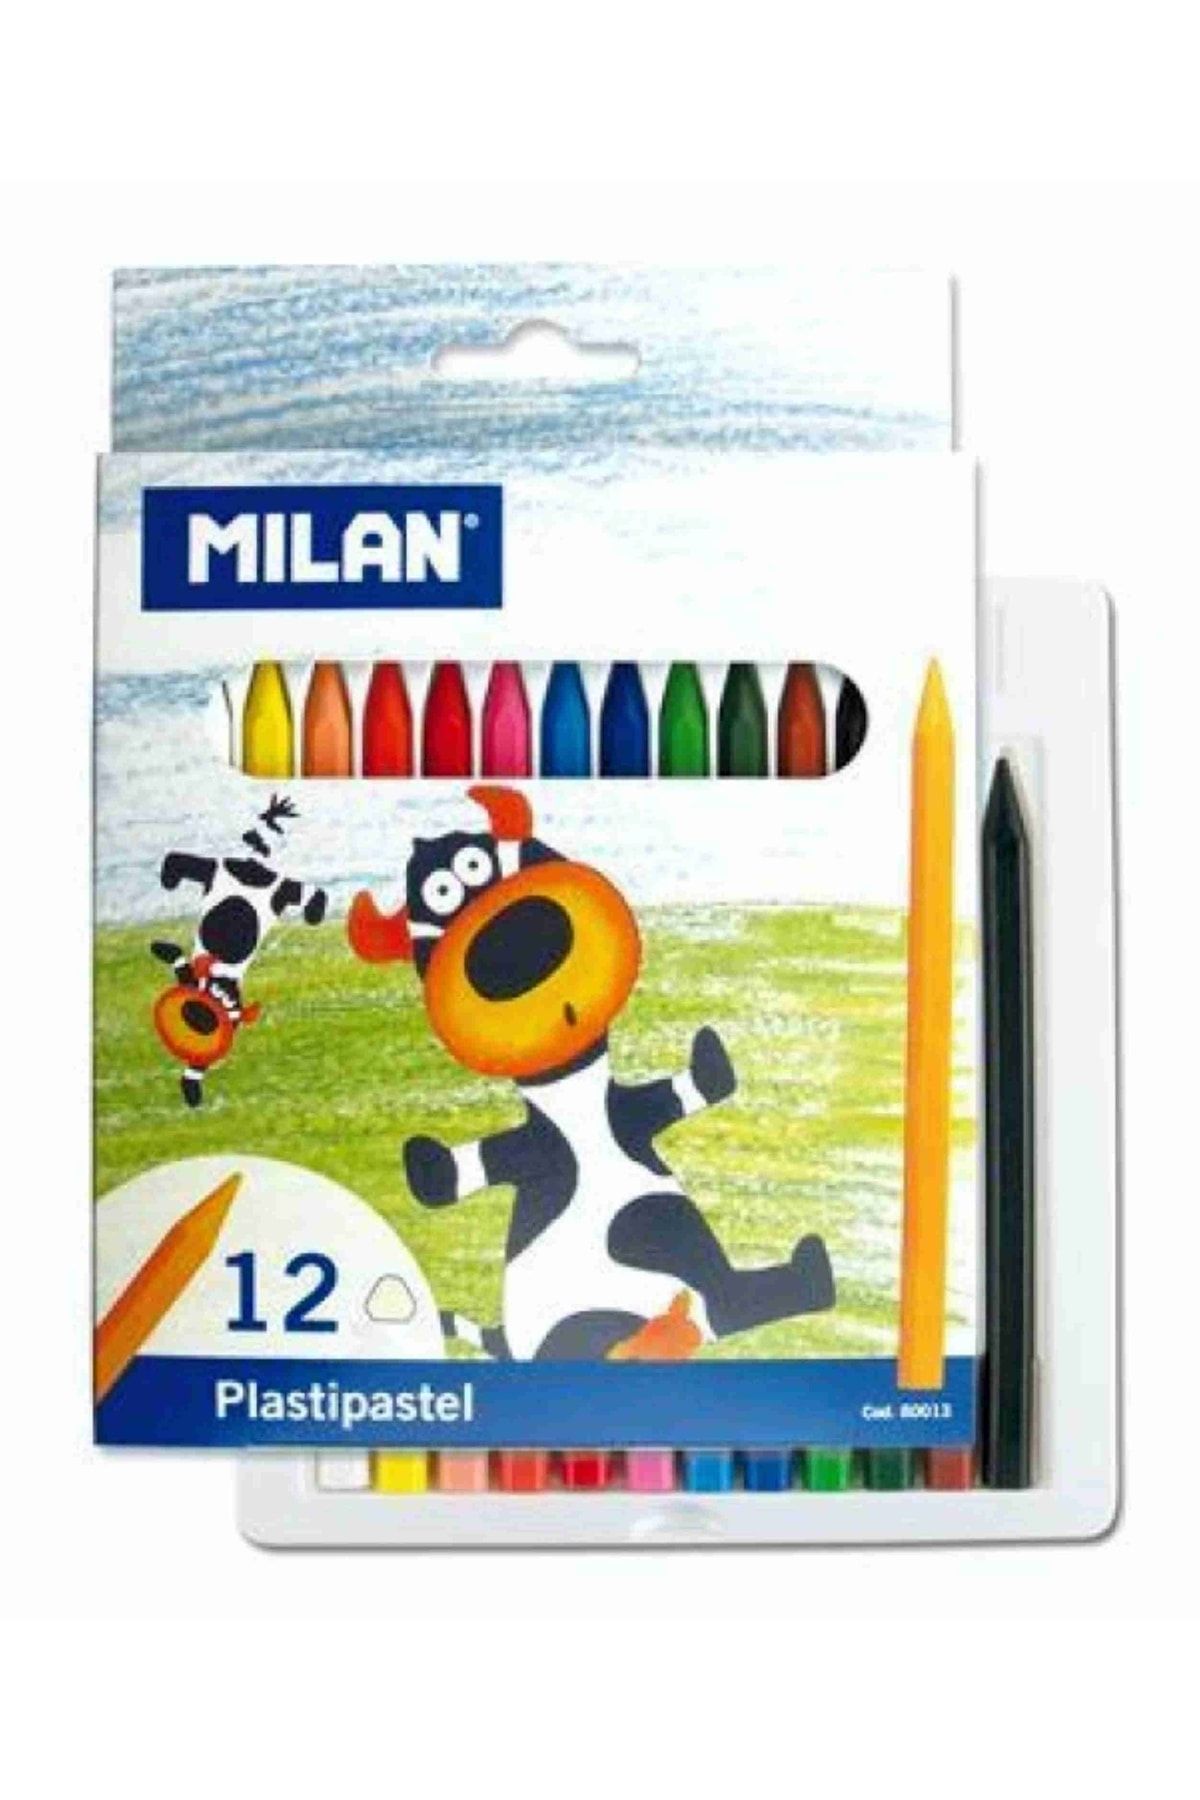 Milan Pastel Boya Kalemi 12'li Plastipastel